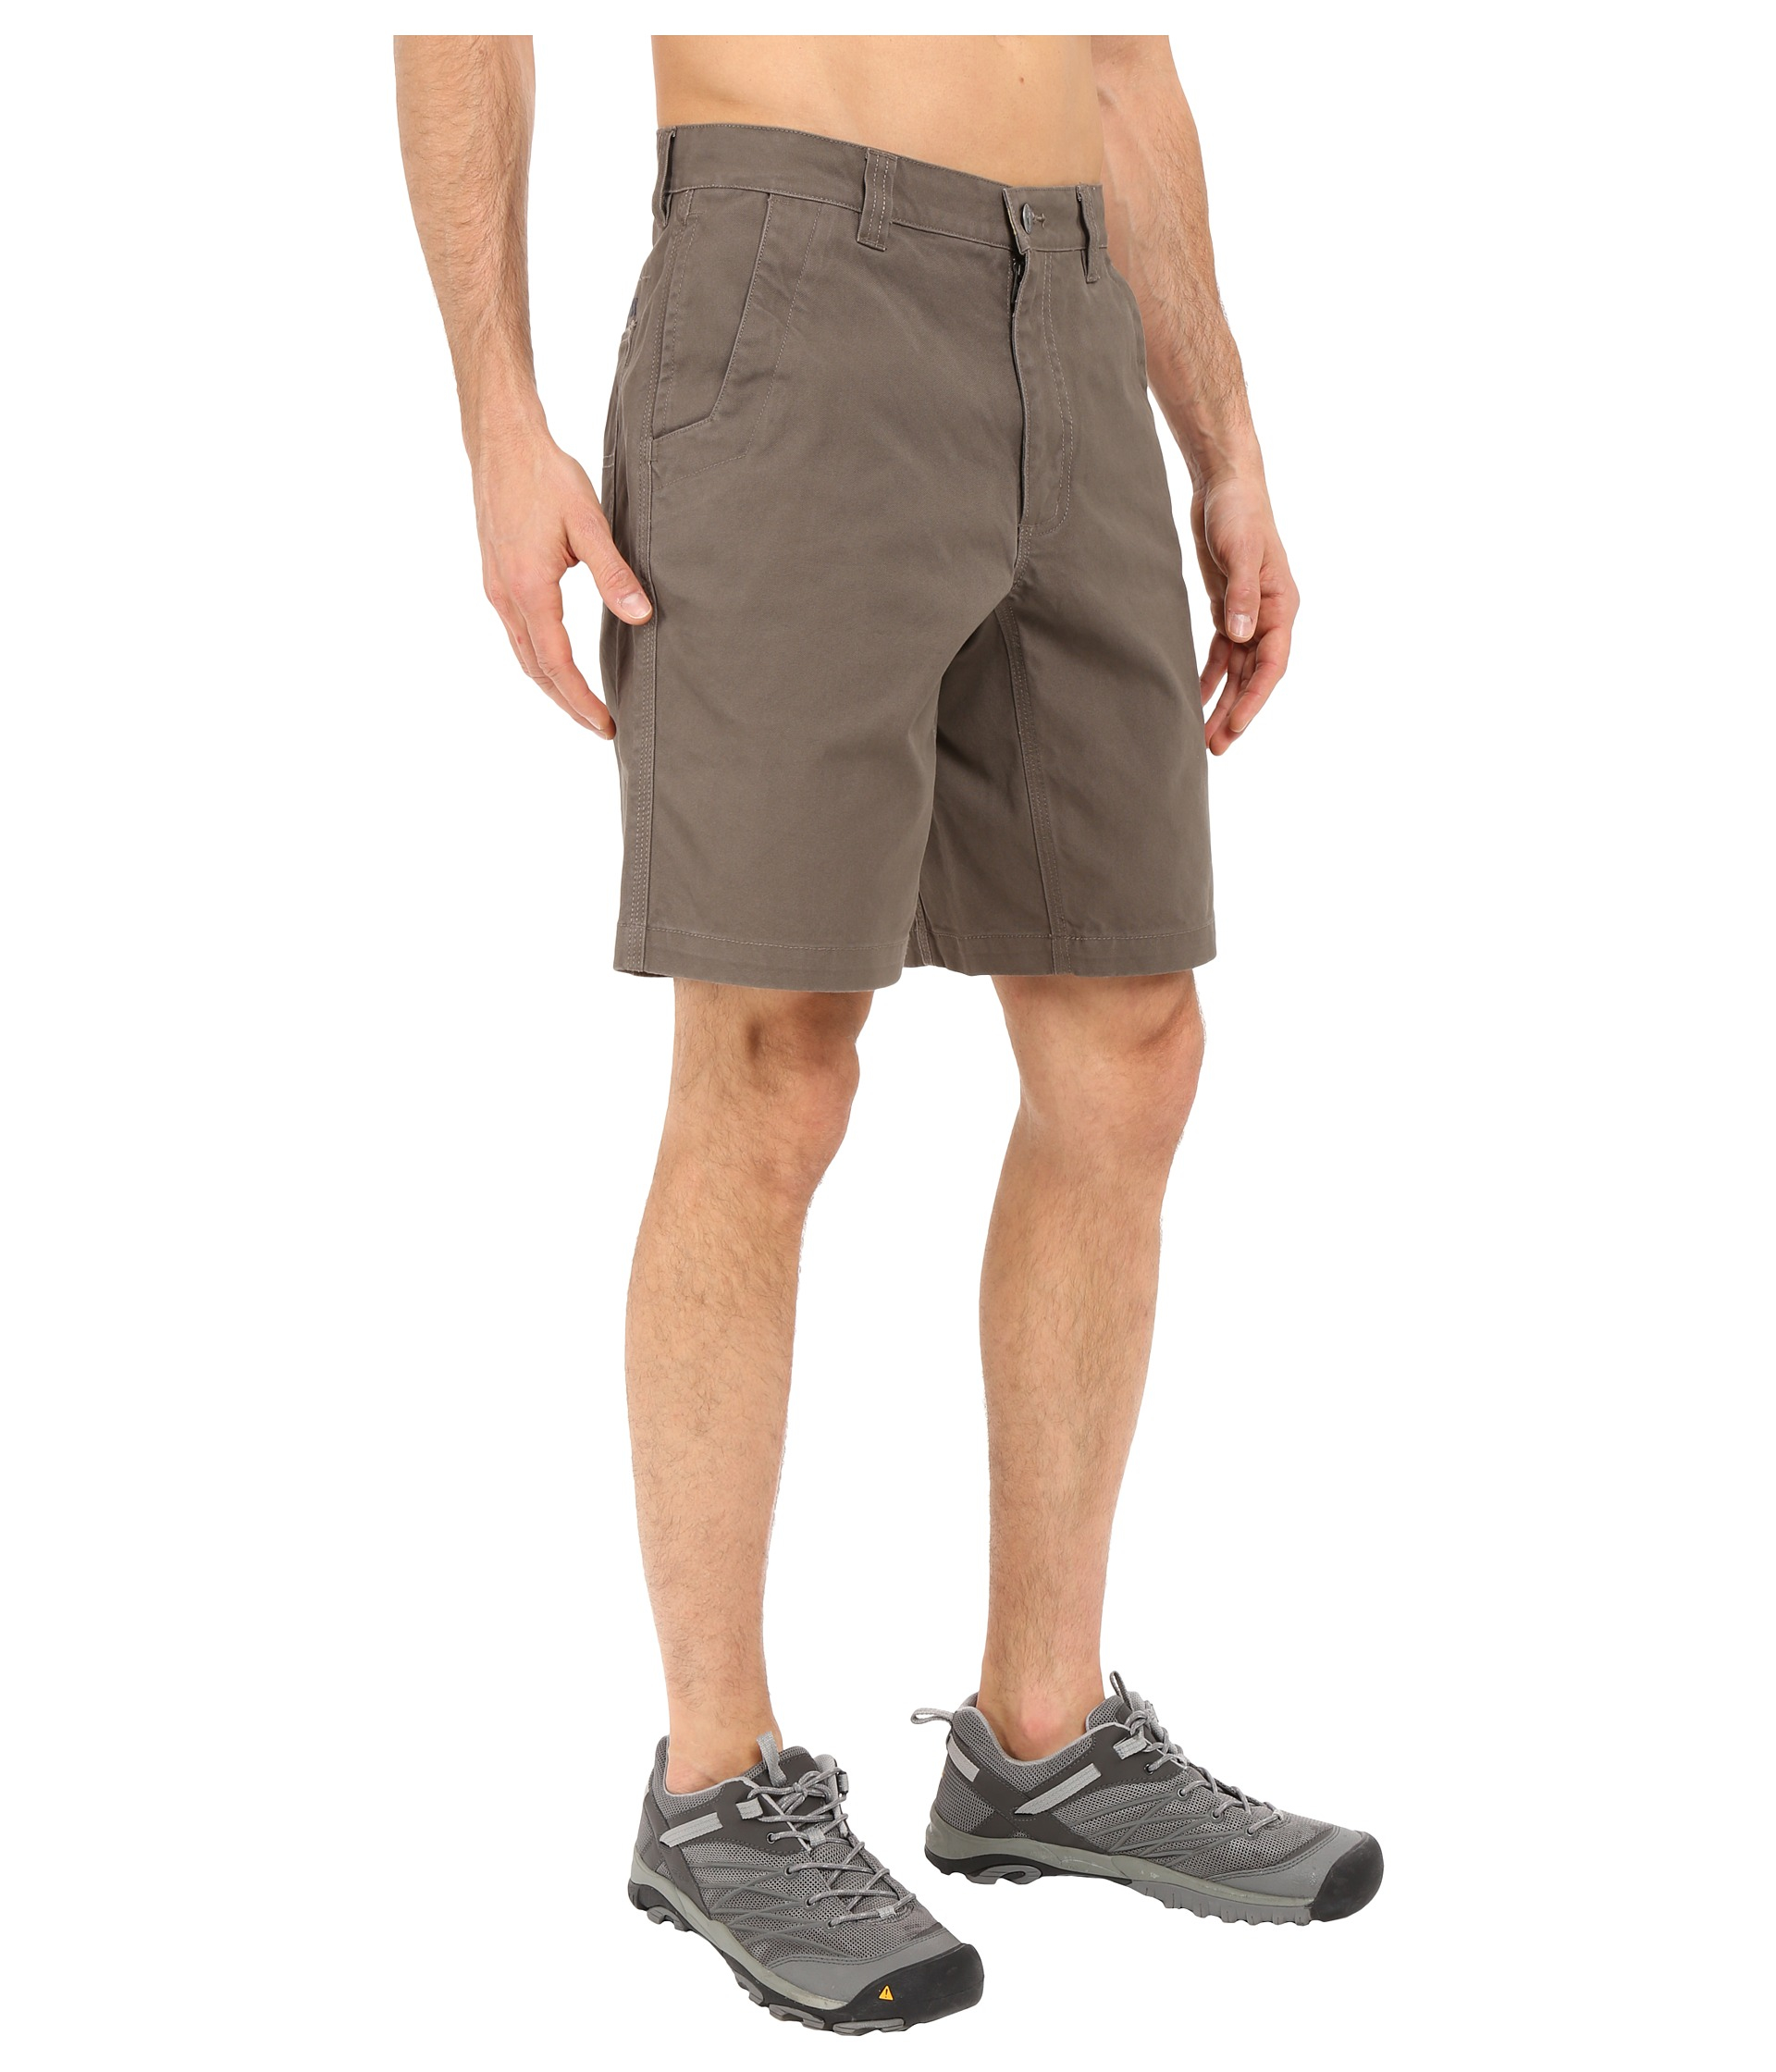 Lyst - Mountain Khakis Original Mountain Shorts in Brown for Men